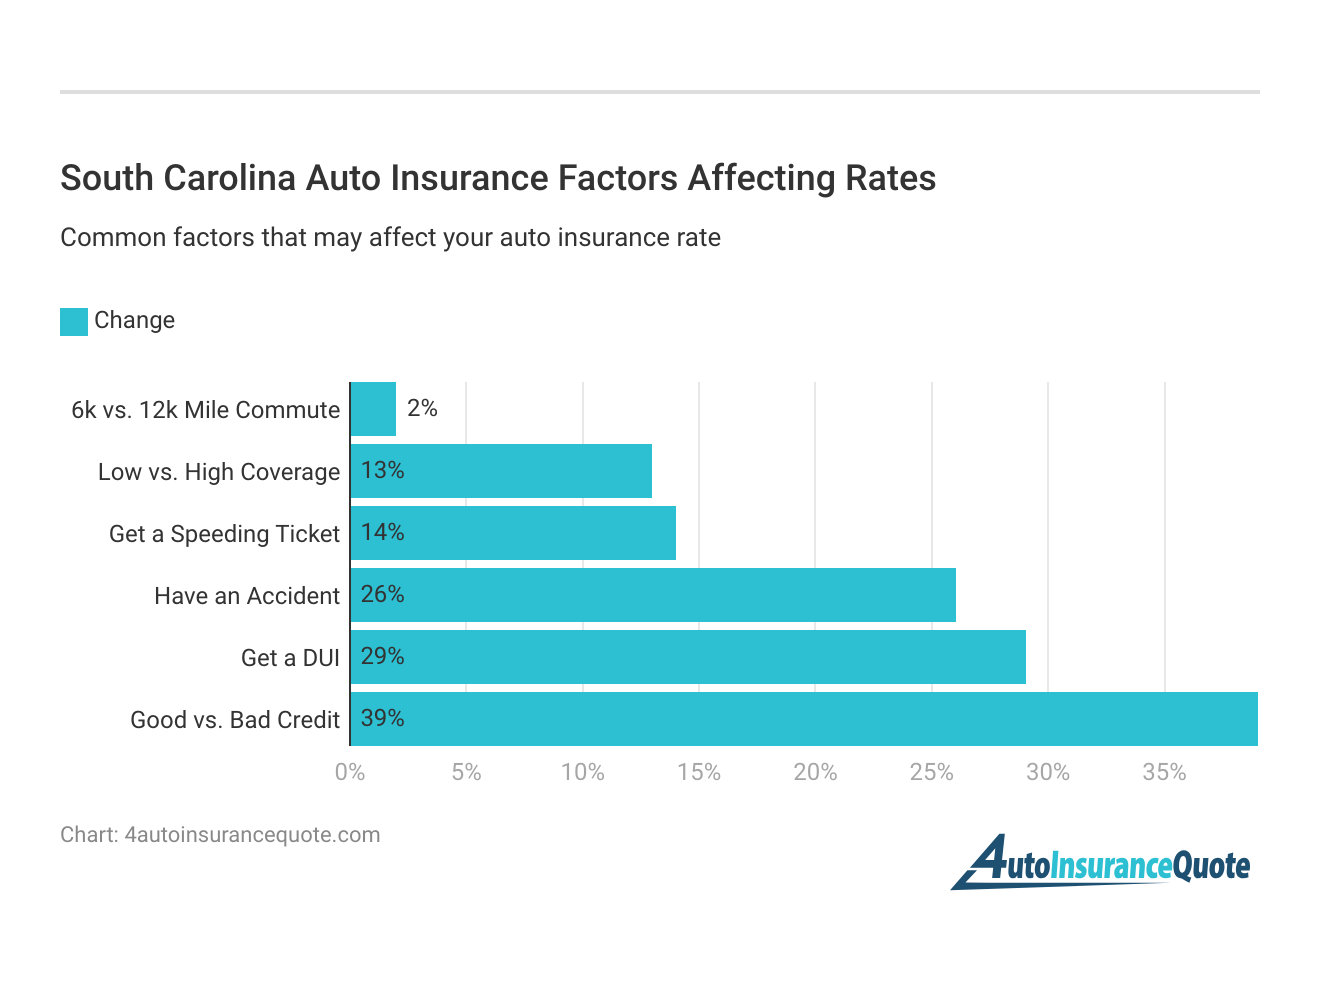 <h3>South Carolina Auto Insurance Factors Affecting Rates</h3>